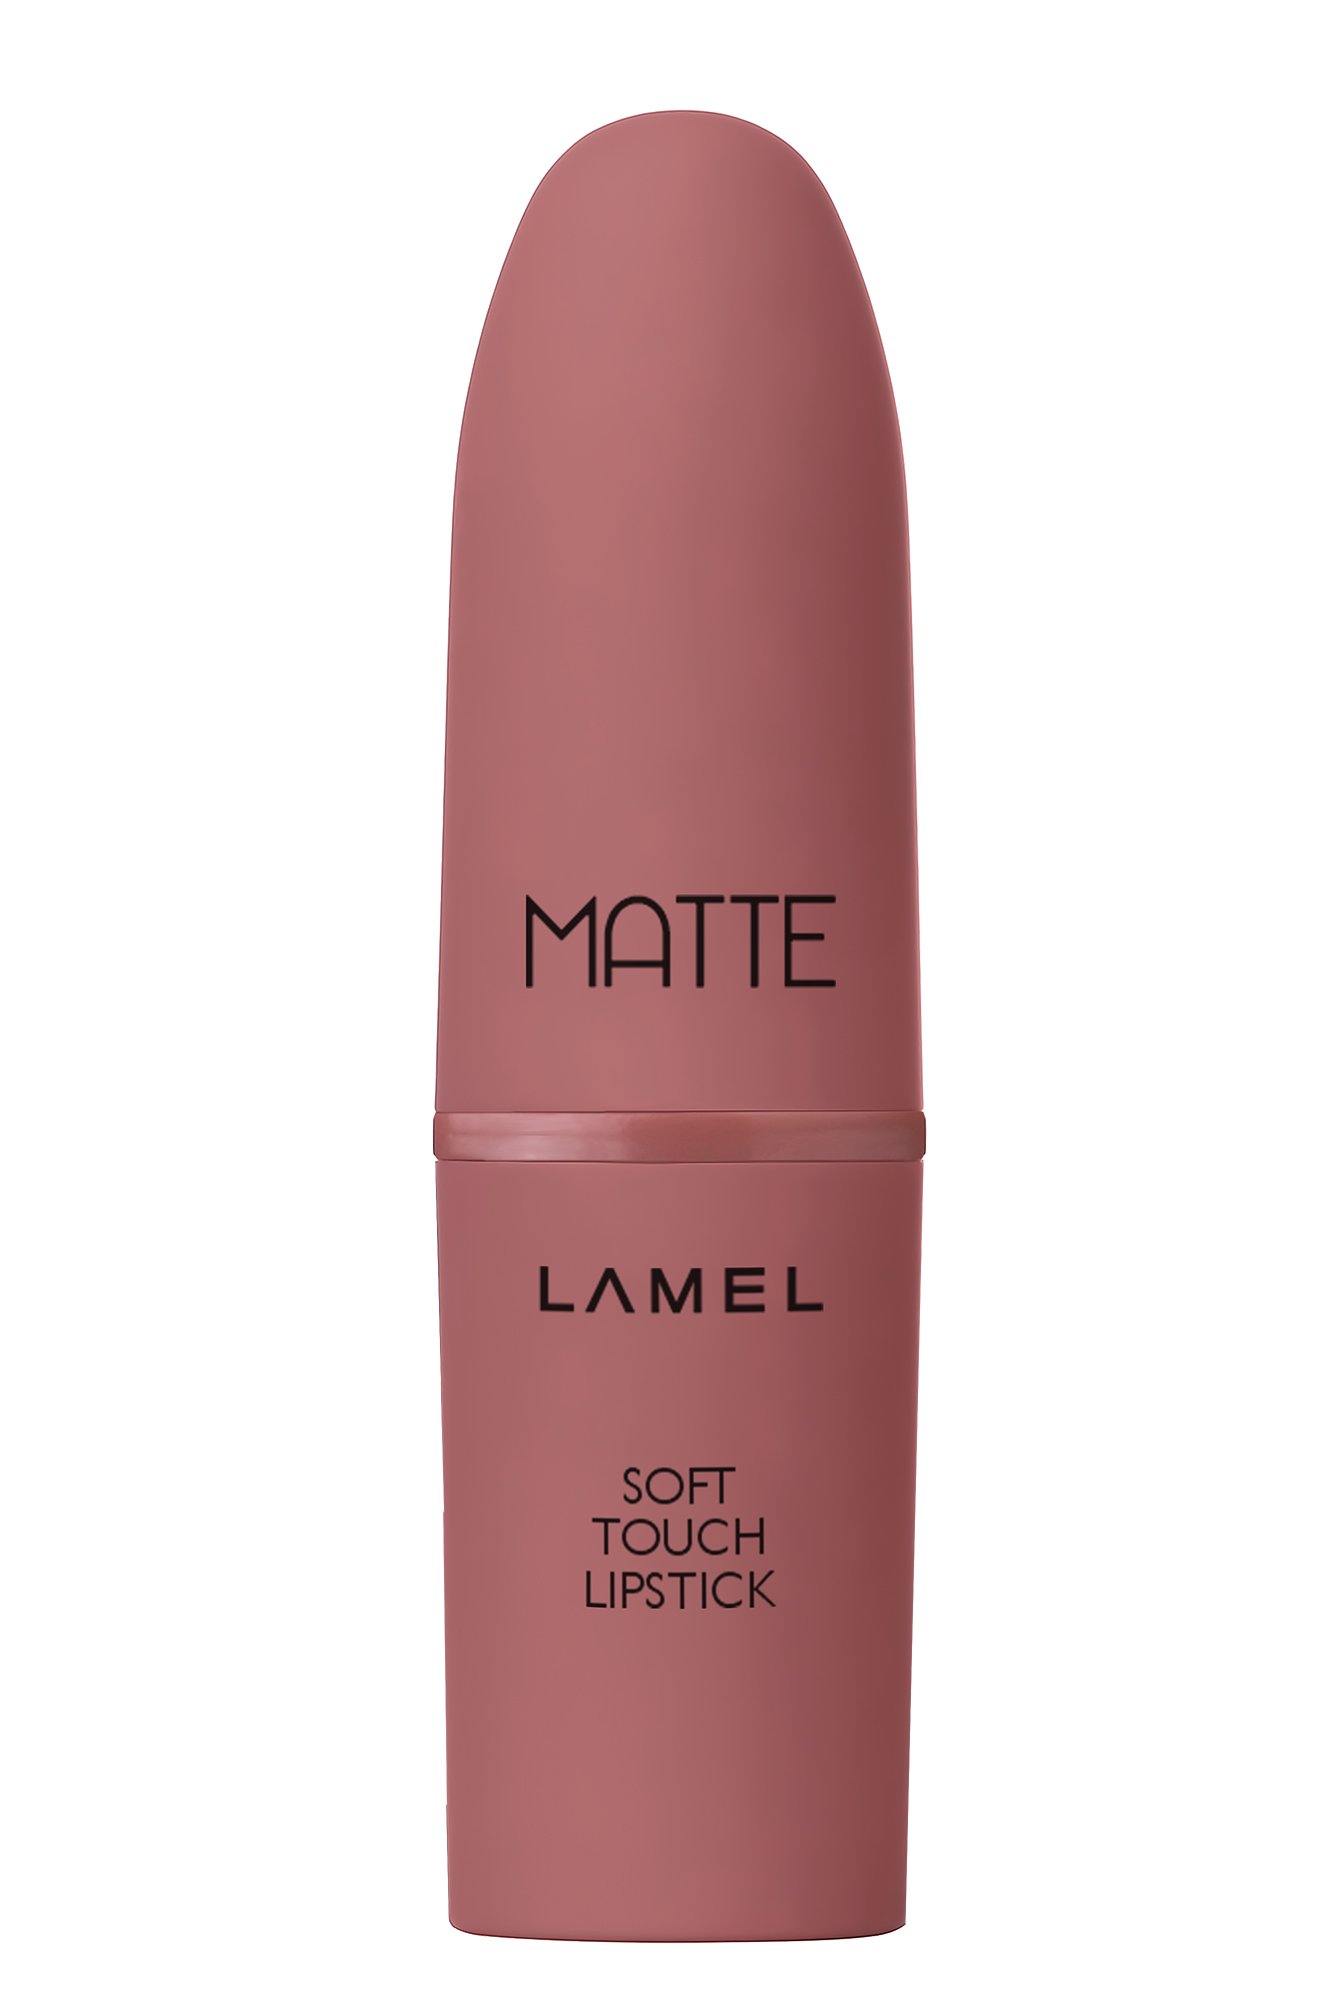 Помада матовая для губ Matte Soft Touch Lipstick т.403 cofe cookie 3,8 г LAMEL Professional